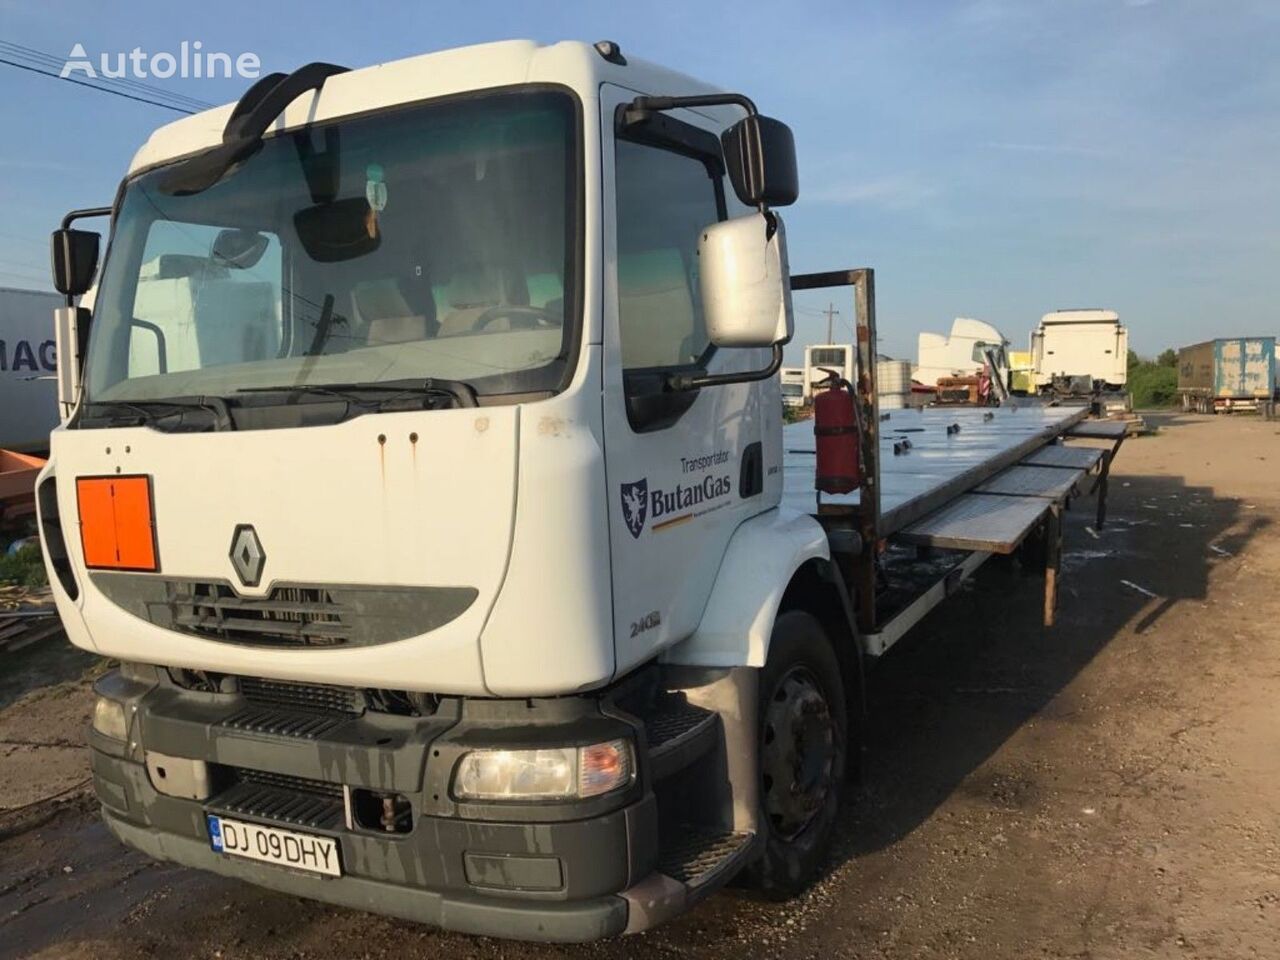 Renault Midlum DXI Adr Transport Butelii platform truck